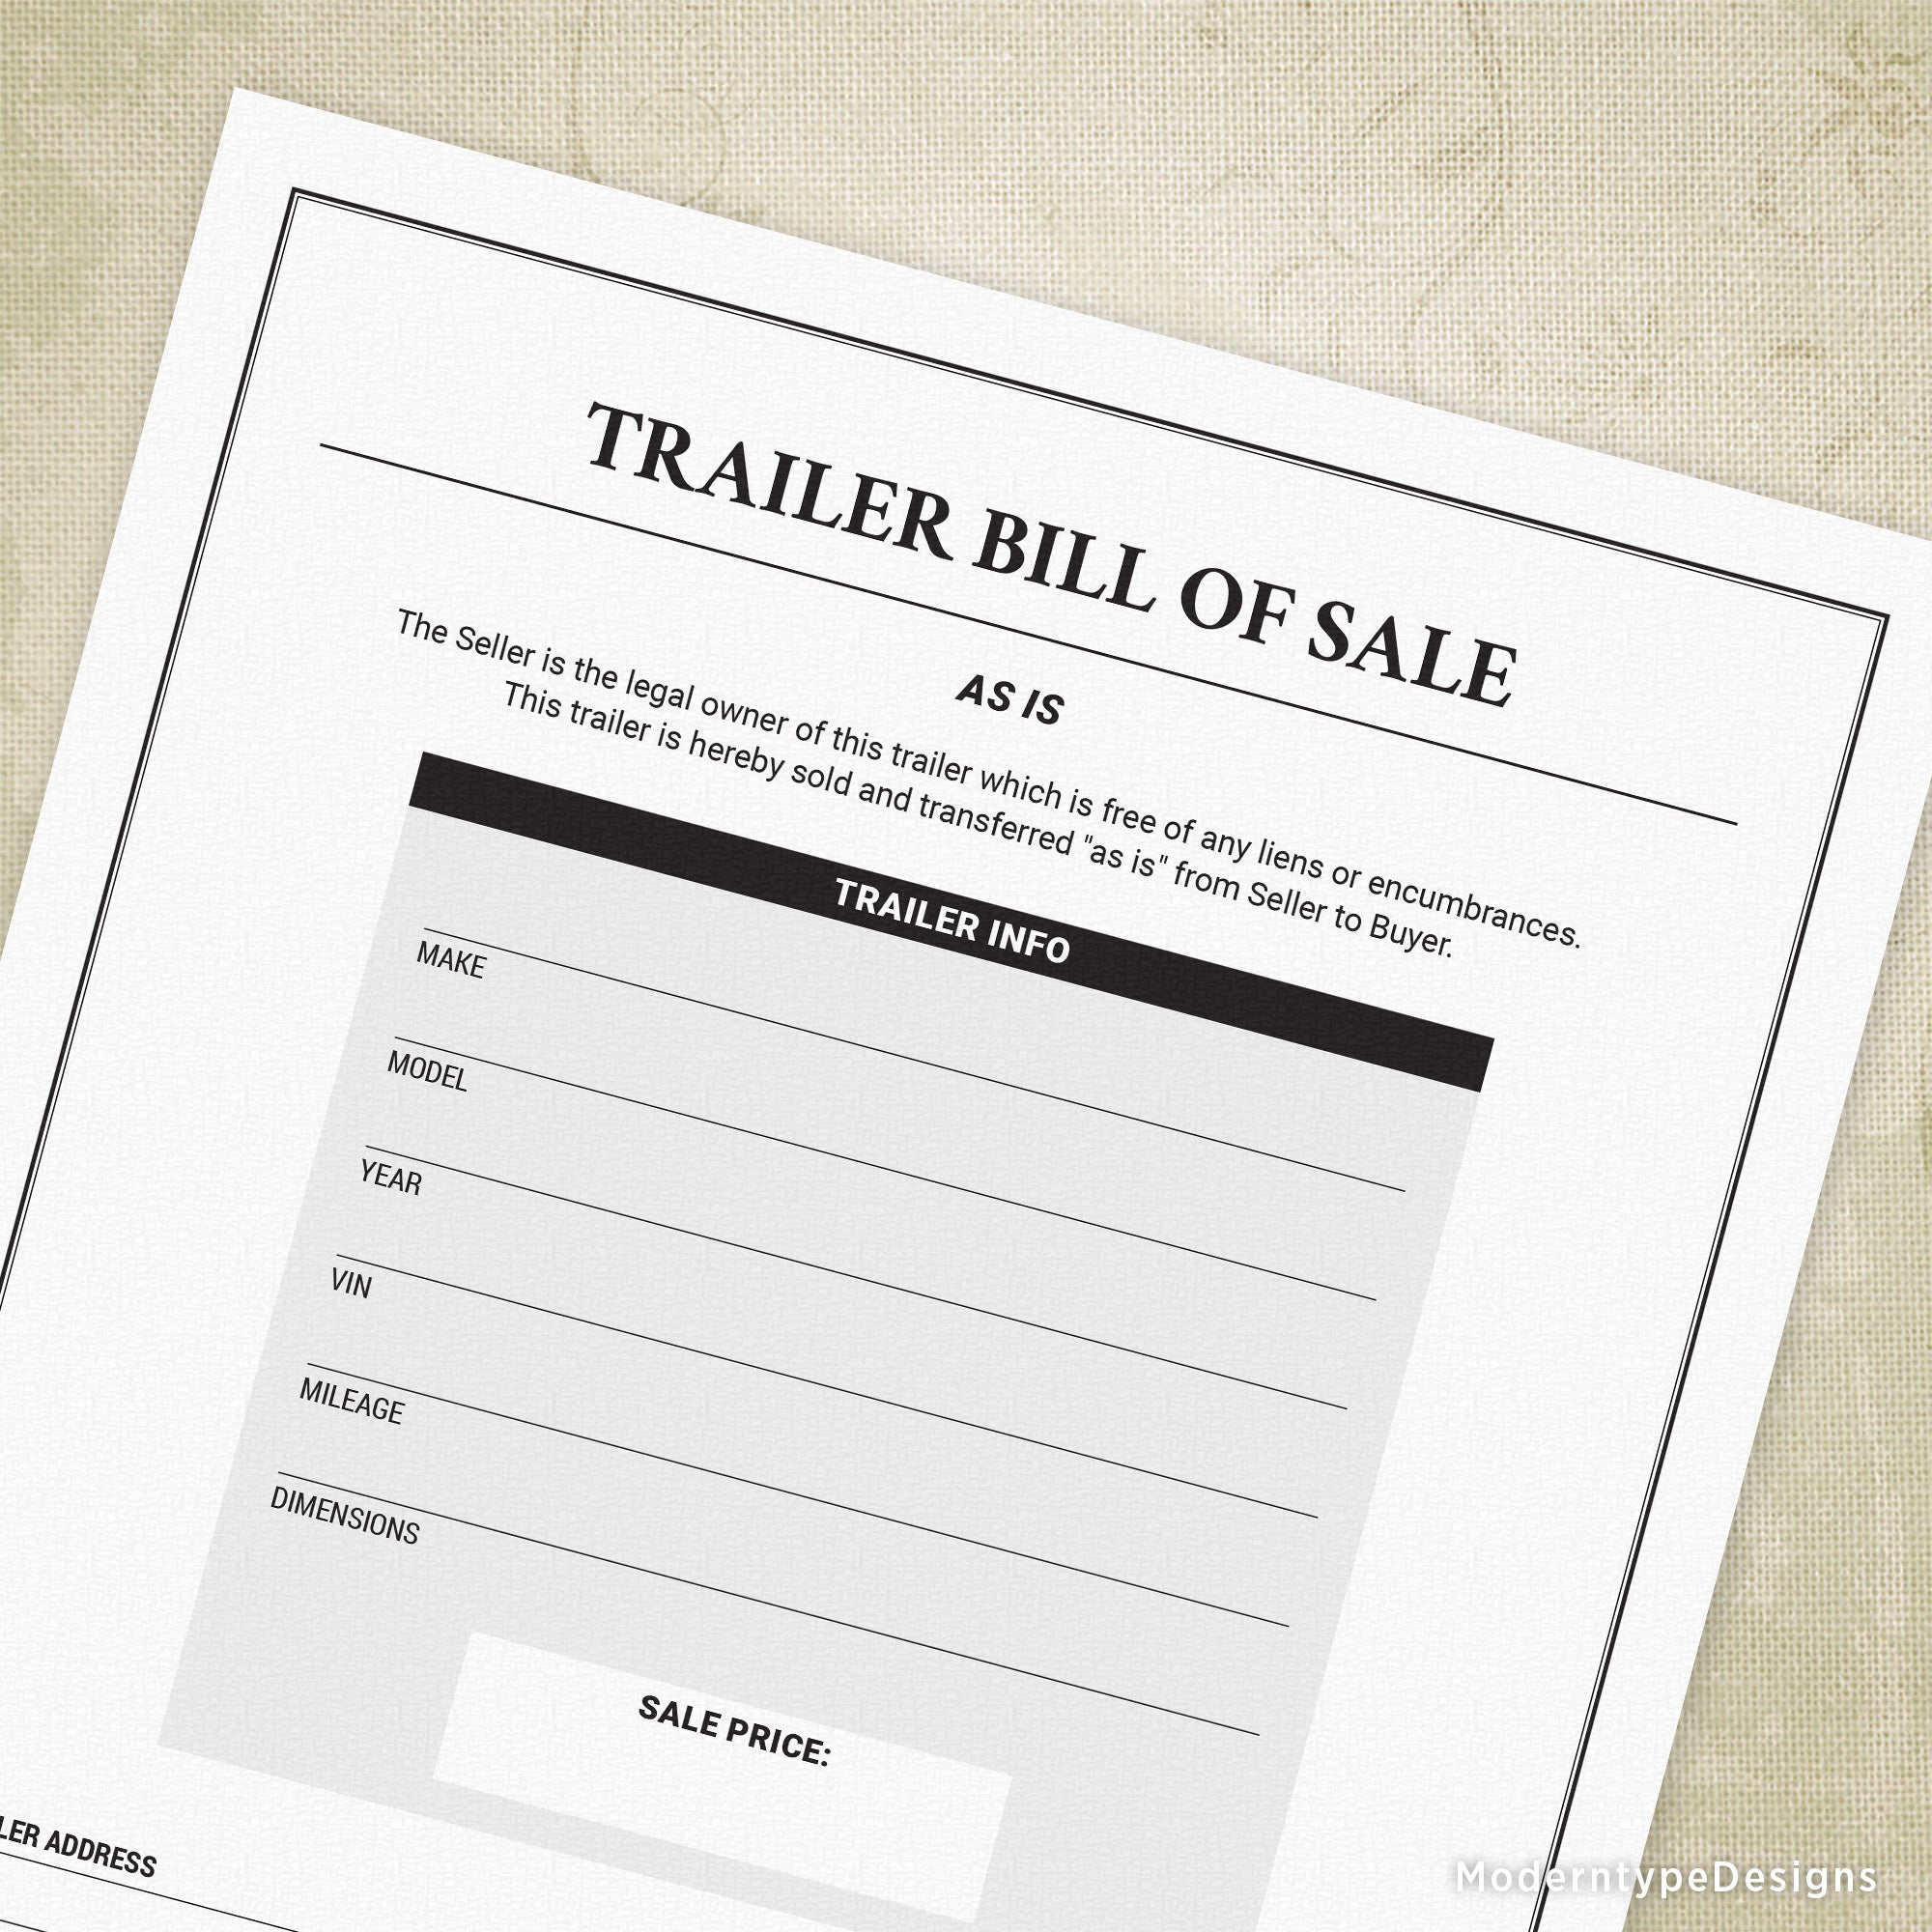 Trailer Bill of Sale Printable